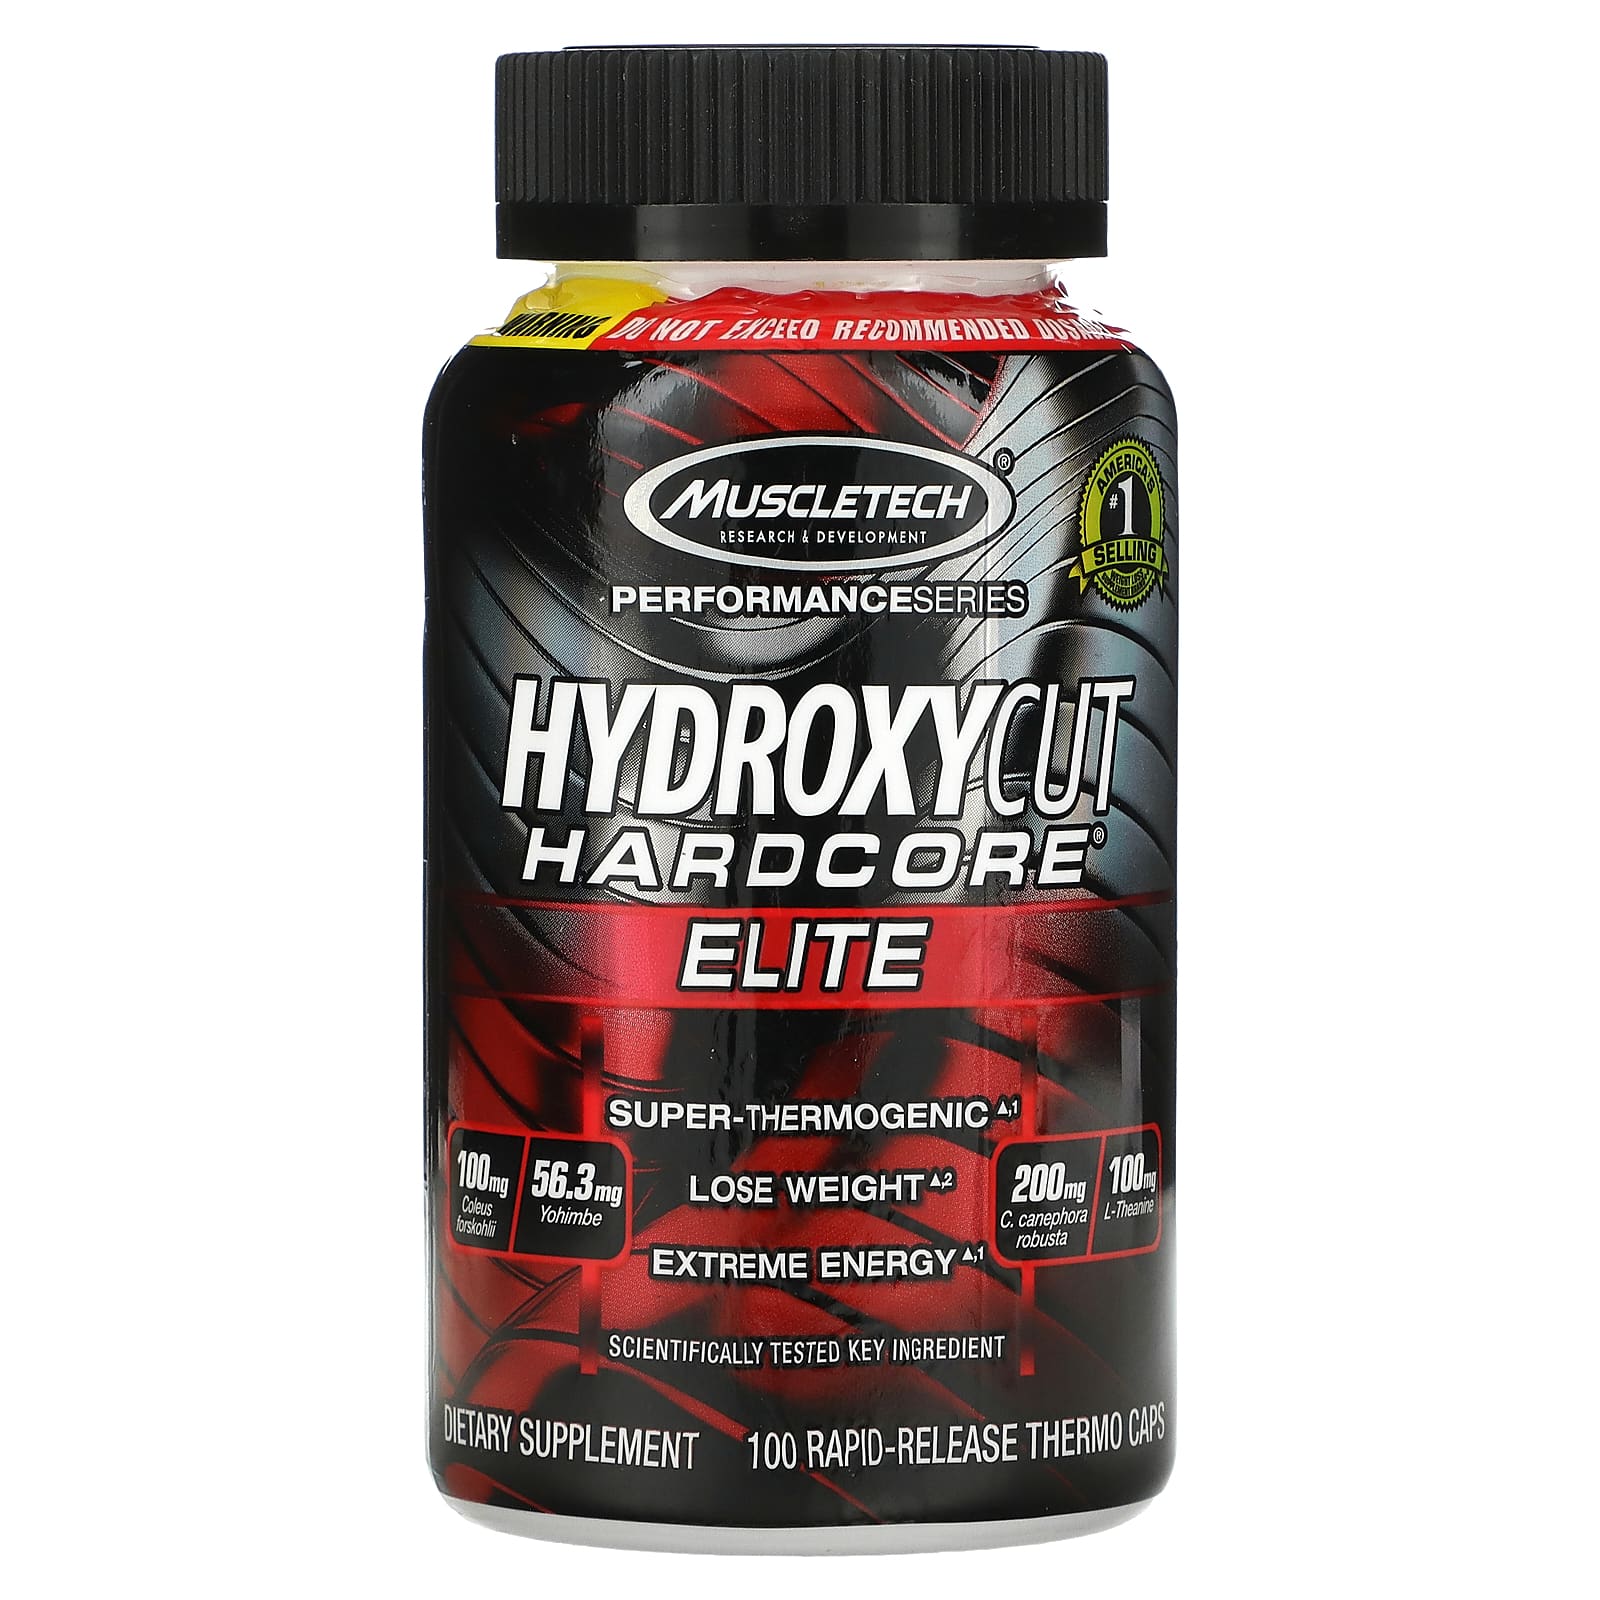 Hydroxycut Performance Series Hydroxycut Hardcore Elite 100 термокапсул быстрого высвобождения